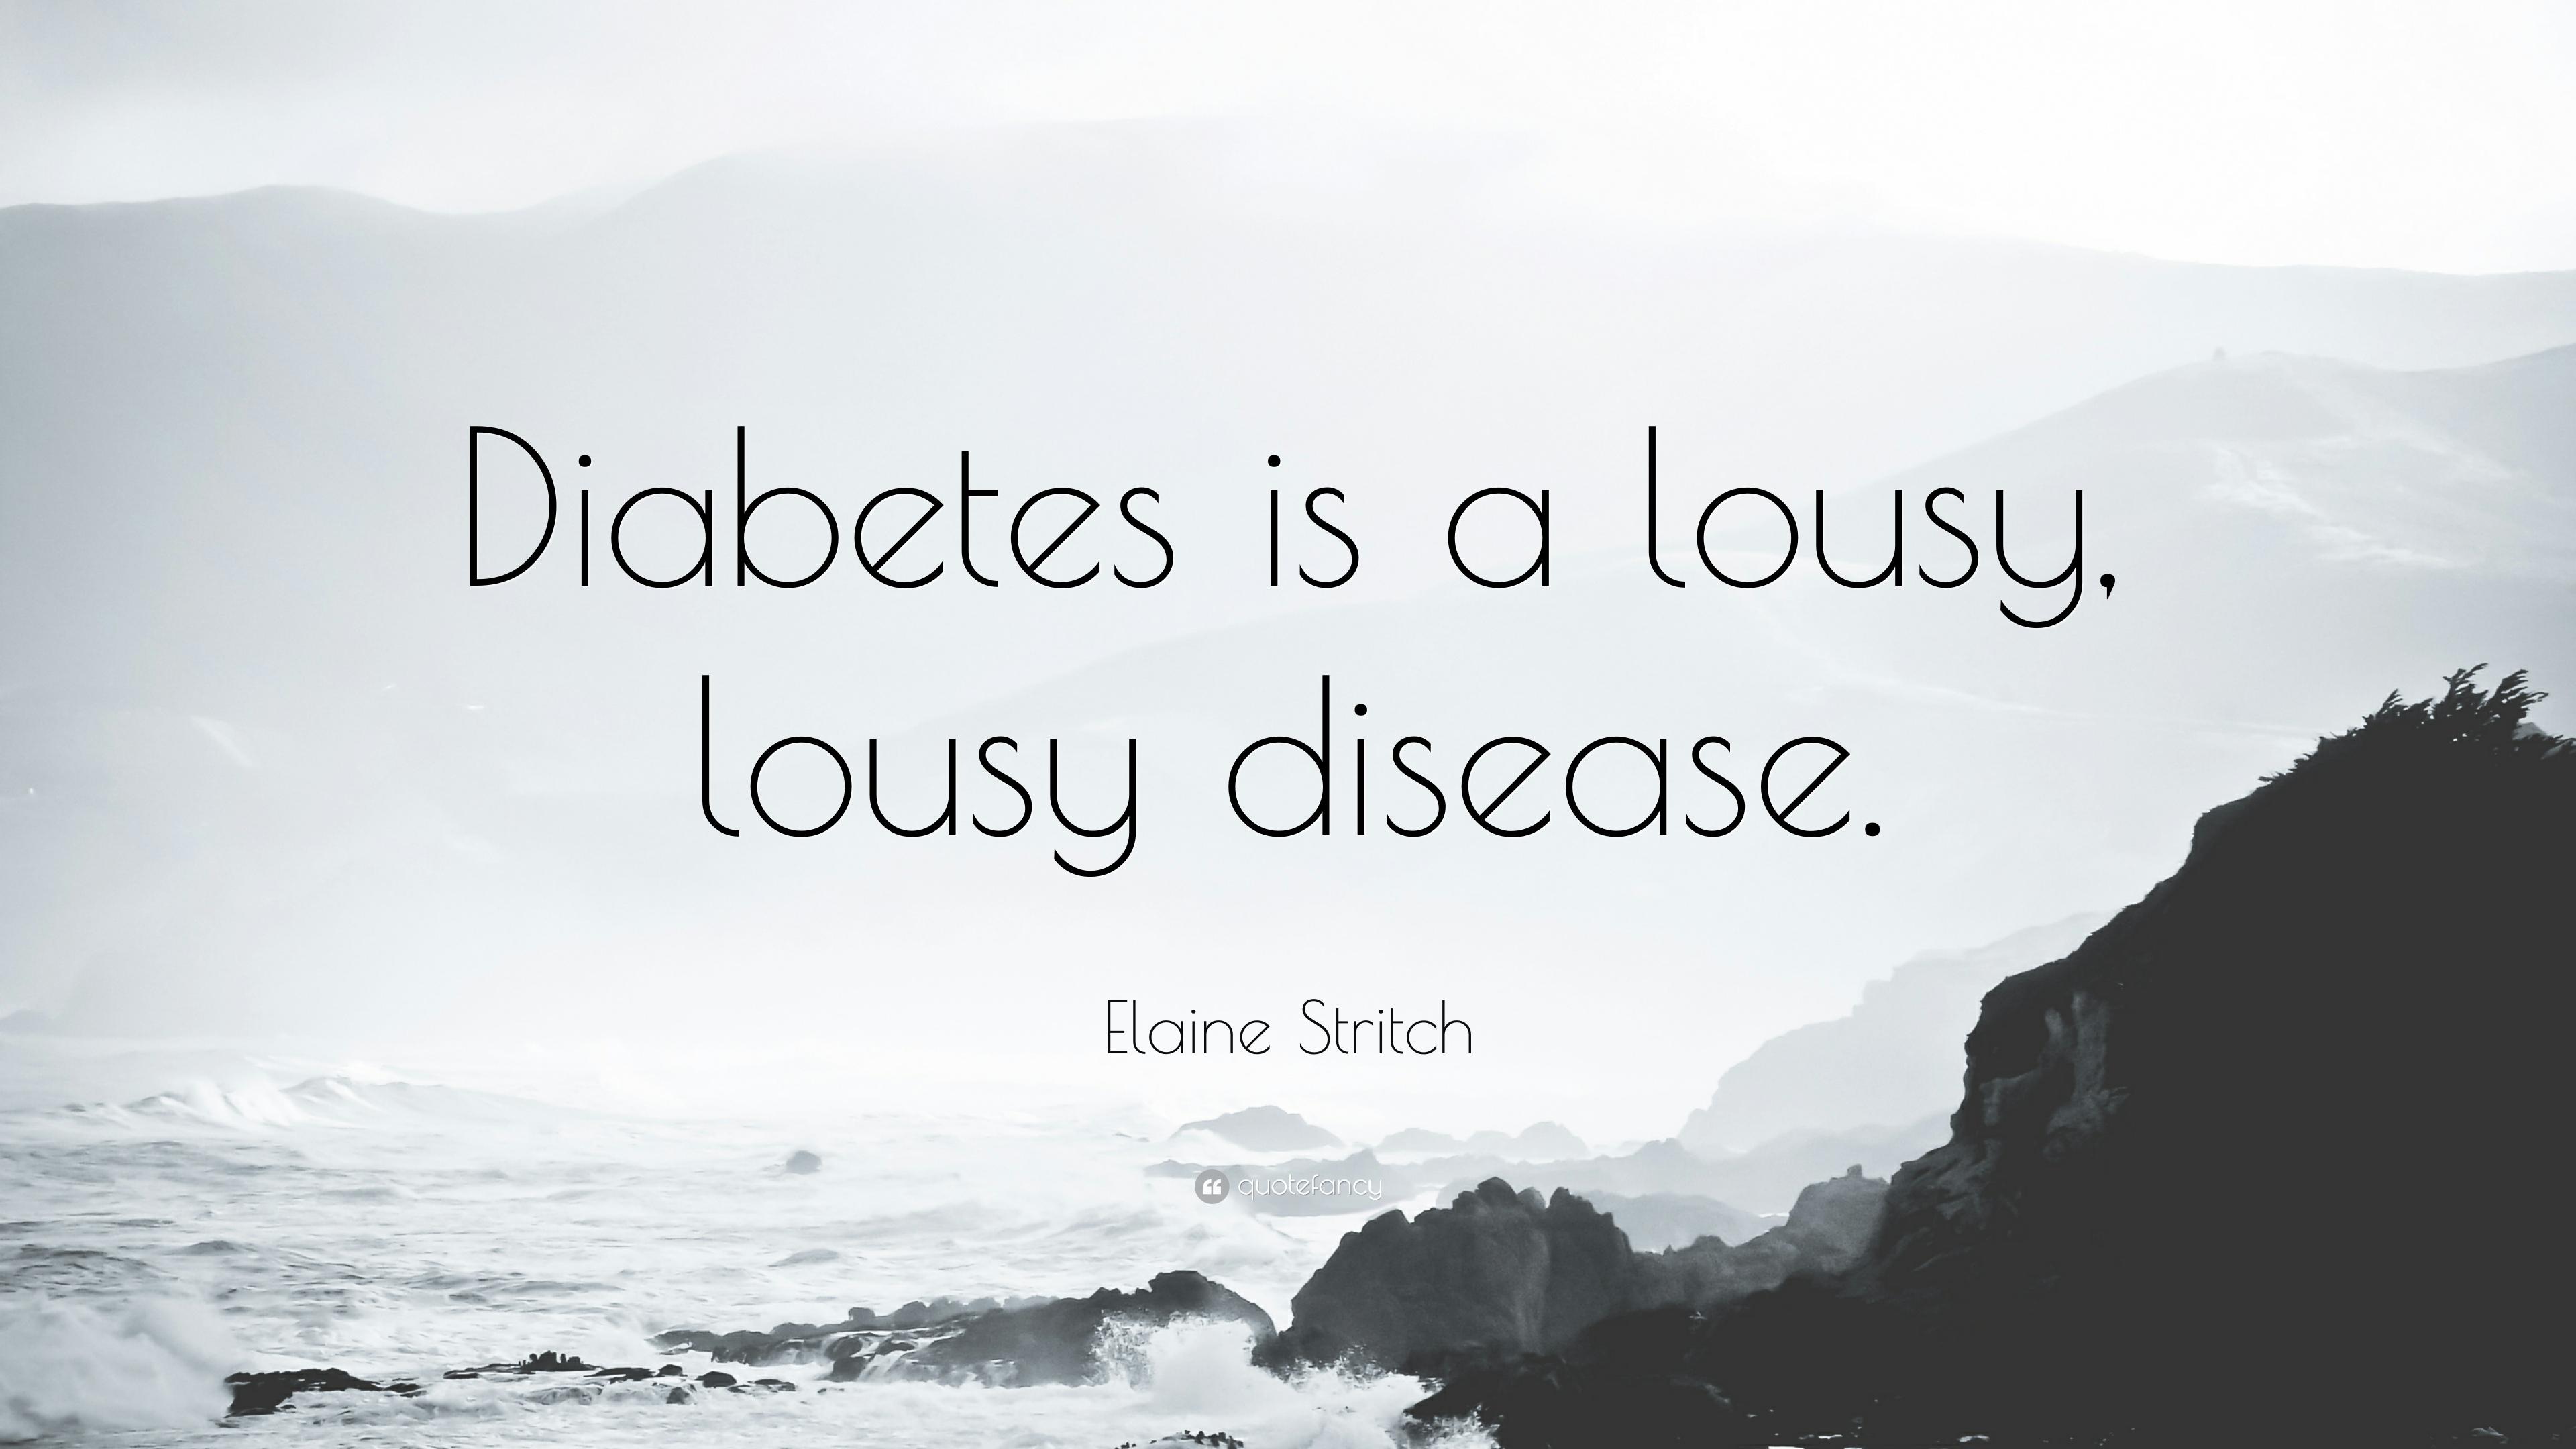 Elaine Stritch Quote: “Diabetes is a lousy, lousy disease.” 7